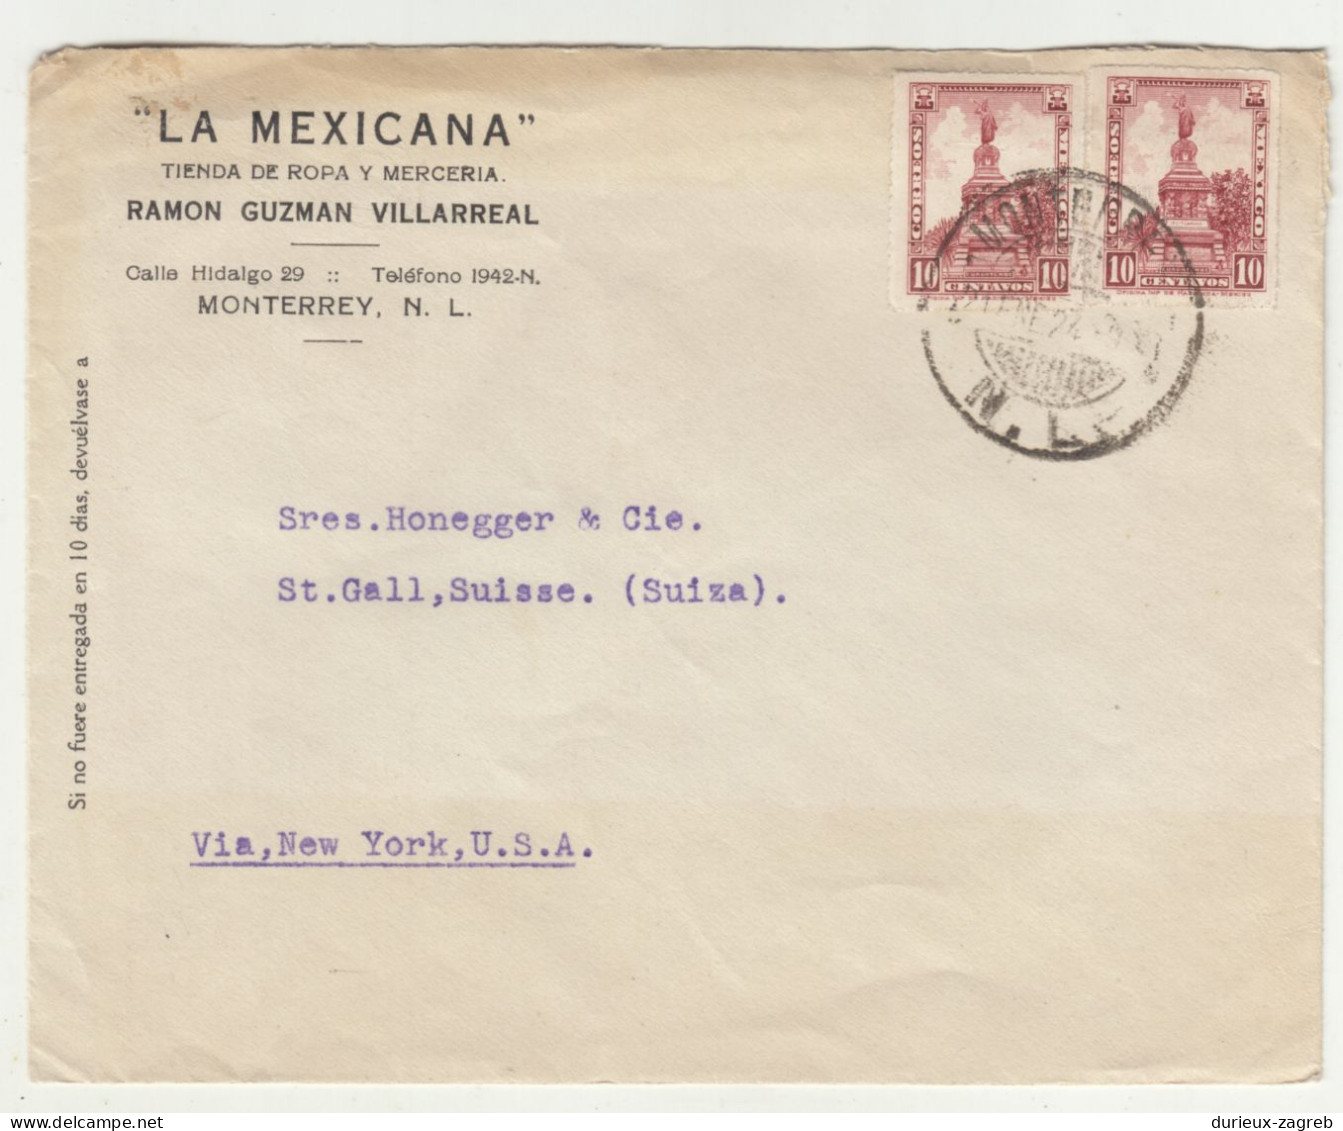 La Mexicana, Monterrey Company Letter Cover Posted 1924 B240503 - Mexico